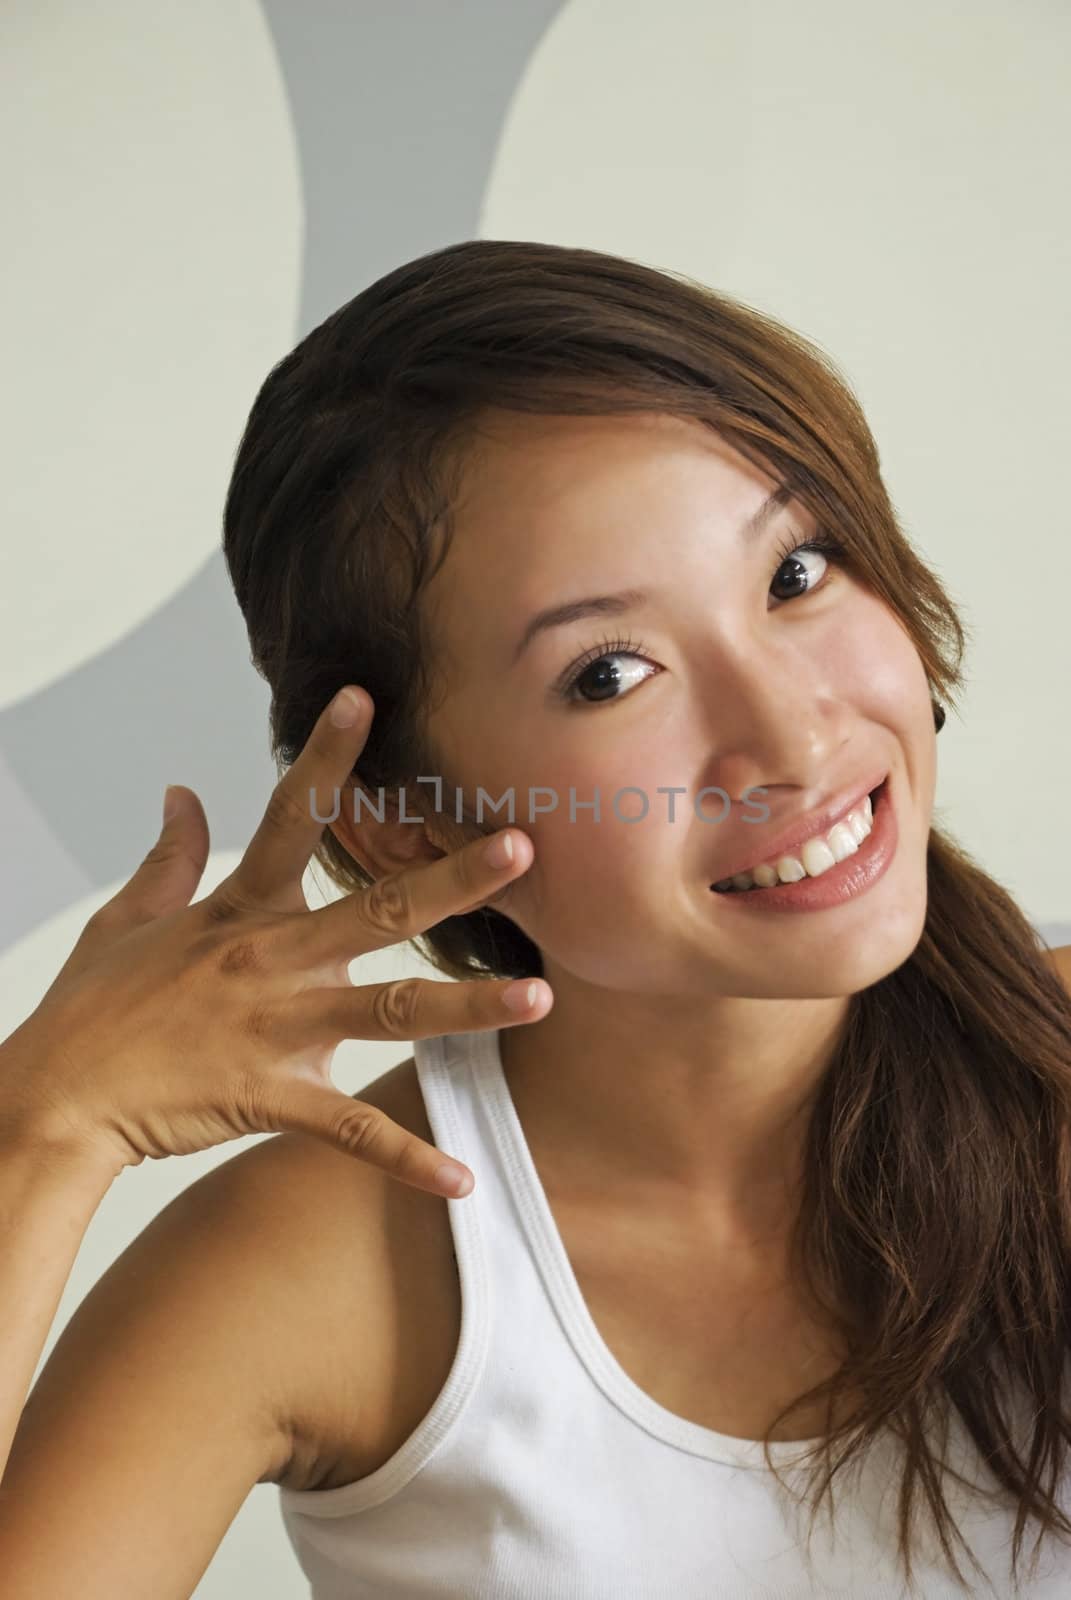 Beautiful Asian Lady Smiling by ilgitano